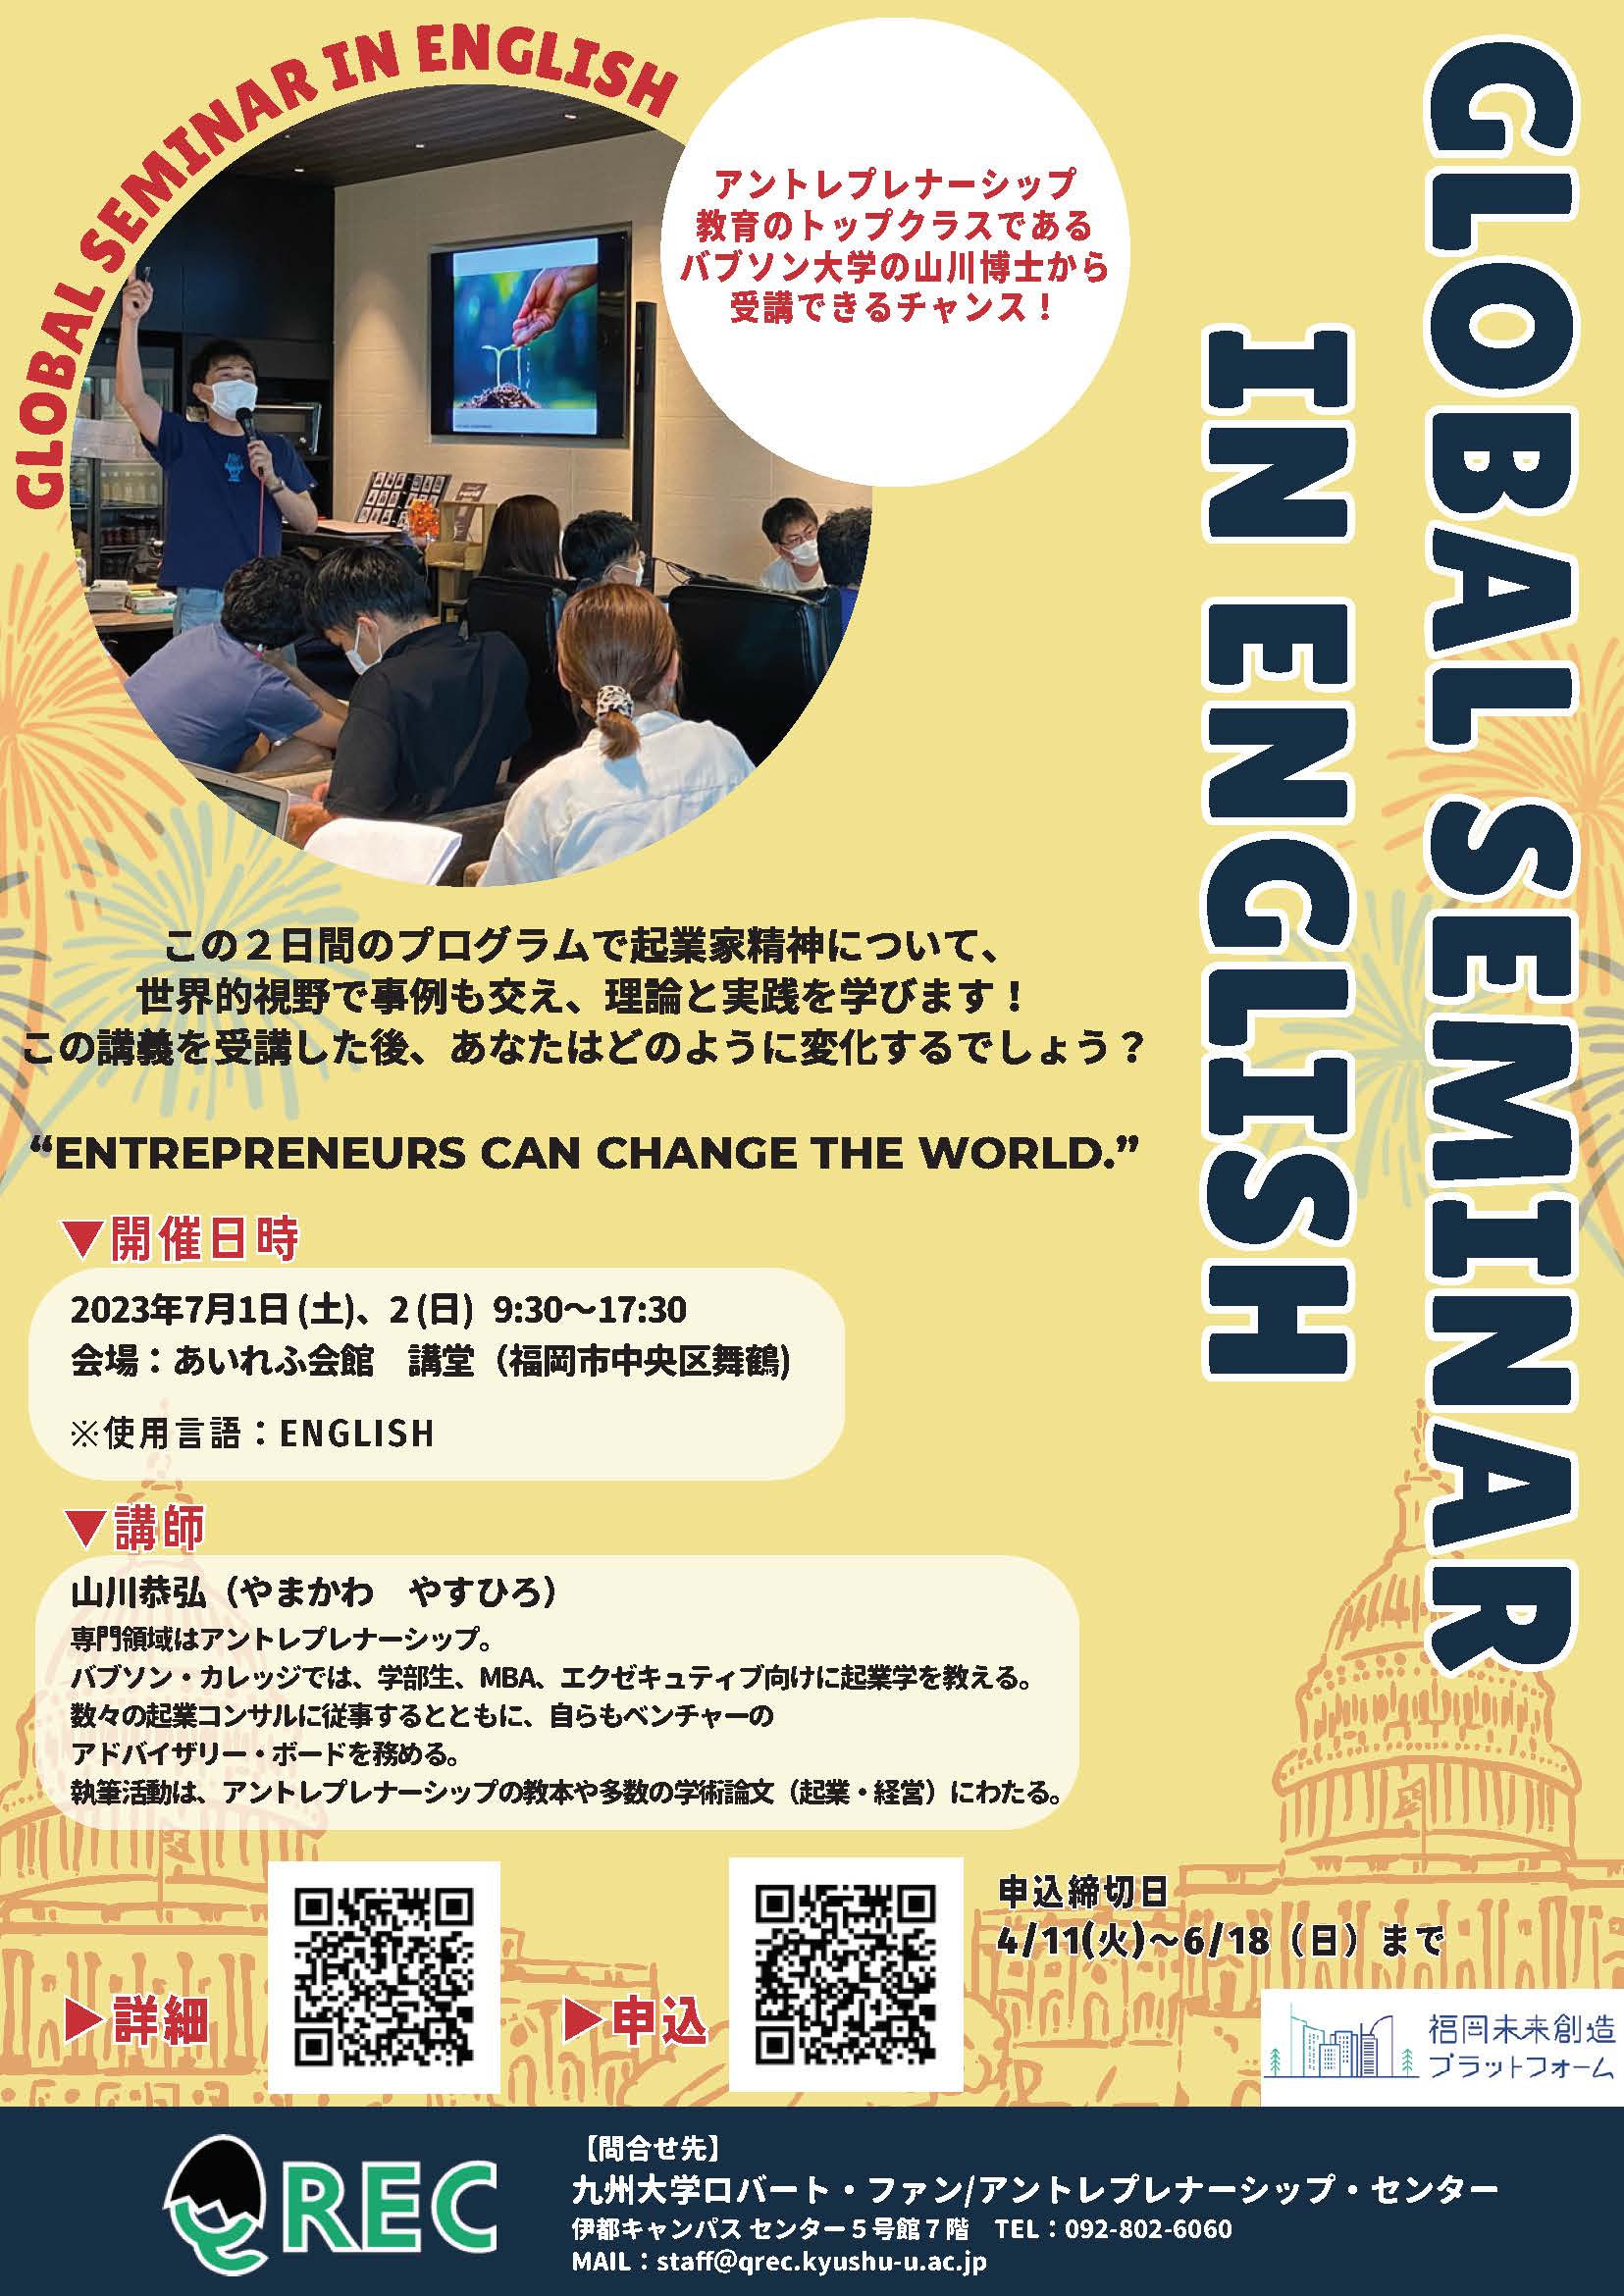 2022　Global Seminar（English)